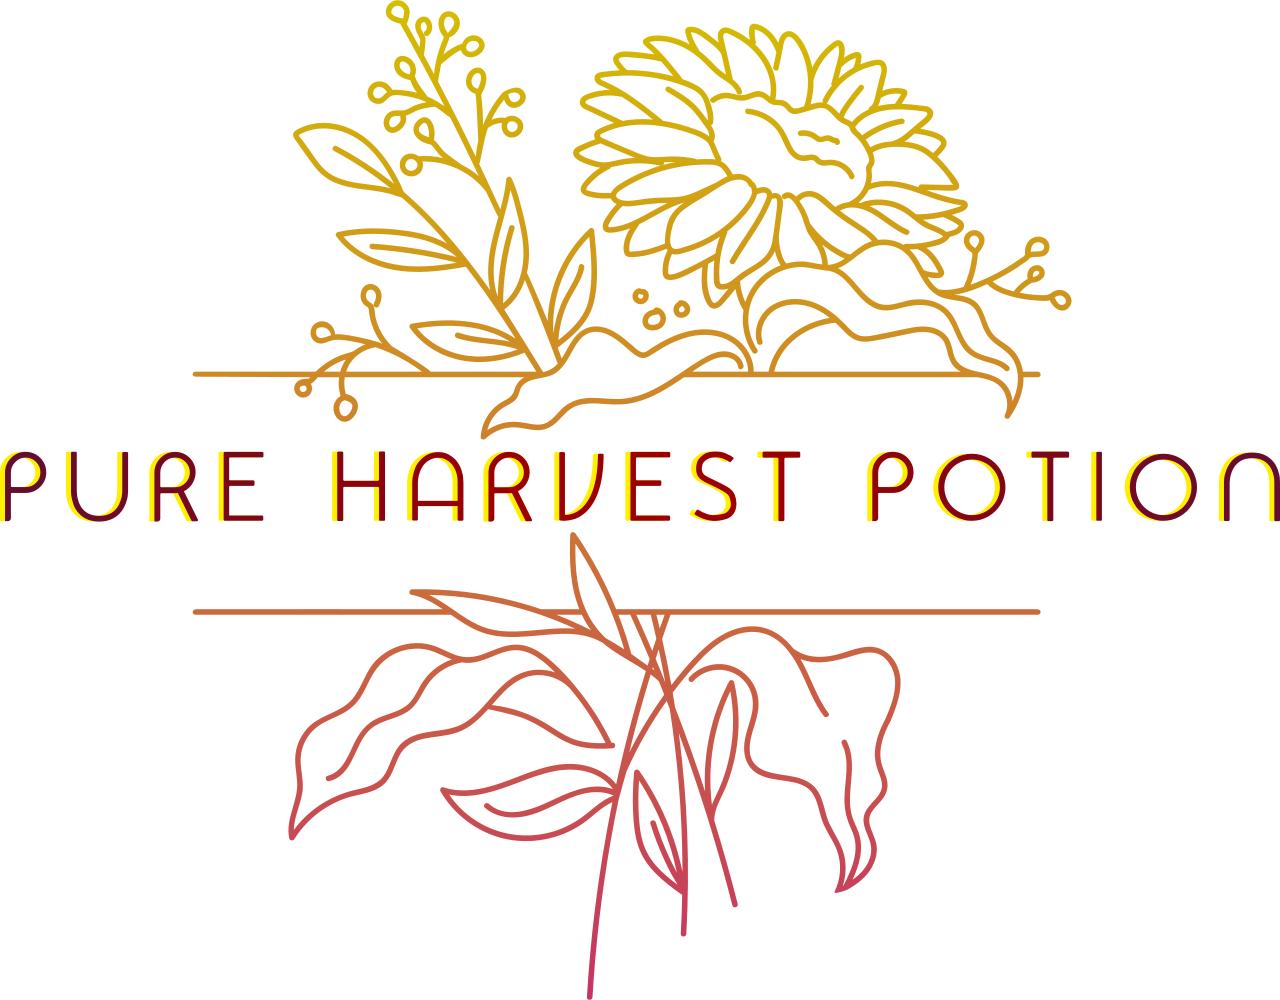 Pure Harvest Potion's logo